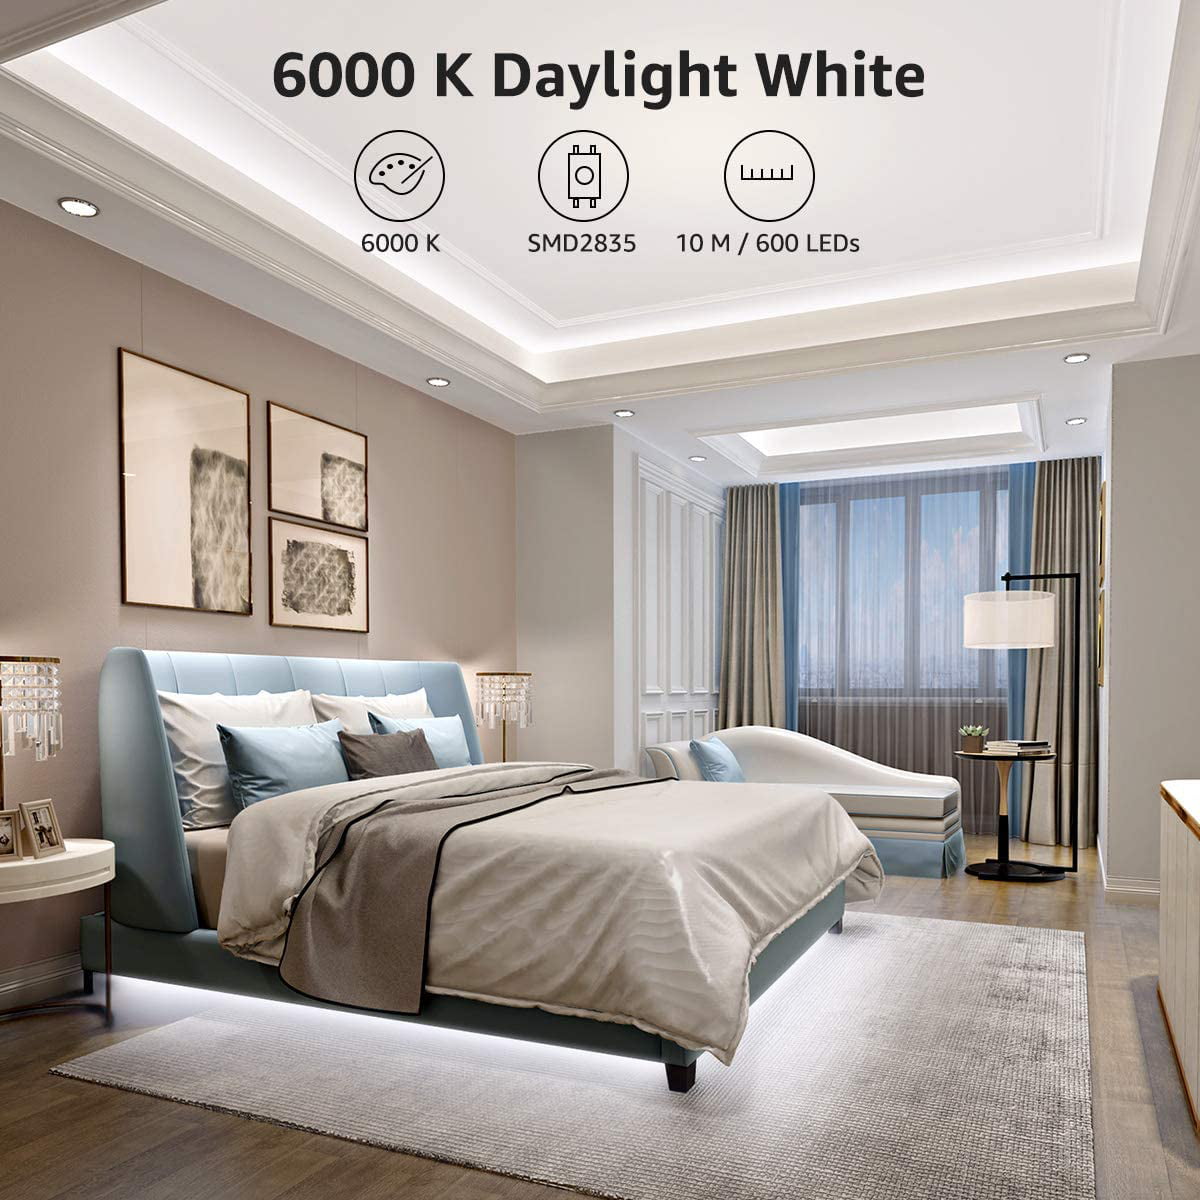 Suitable for Home Daylight White Bedroom Strong 3M Adhesive 6000K Super Bright LED Tape Lights Kitchen 16.4ft Dimmable Vanity Lights Lighting EVER LED Strip Light White 300 LEDs 2835